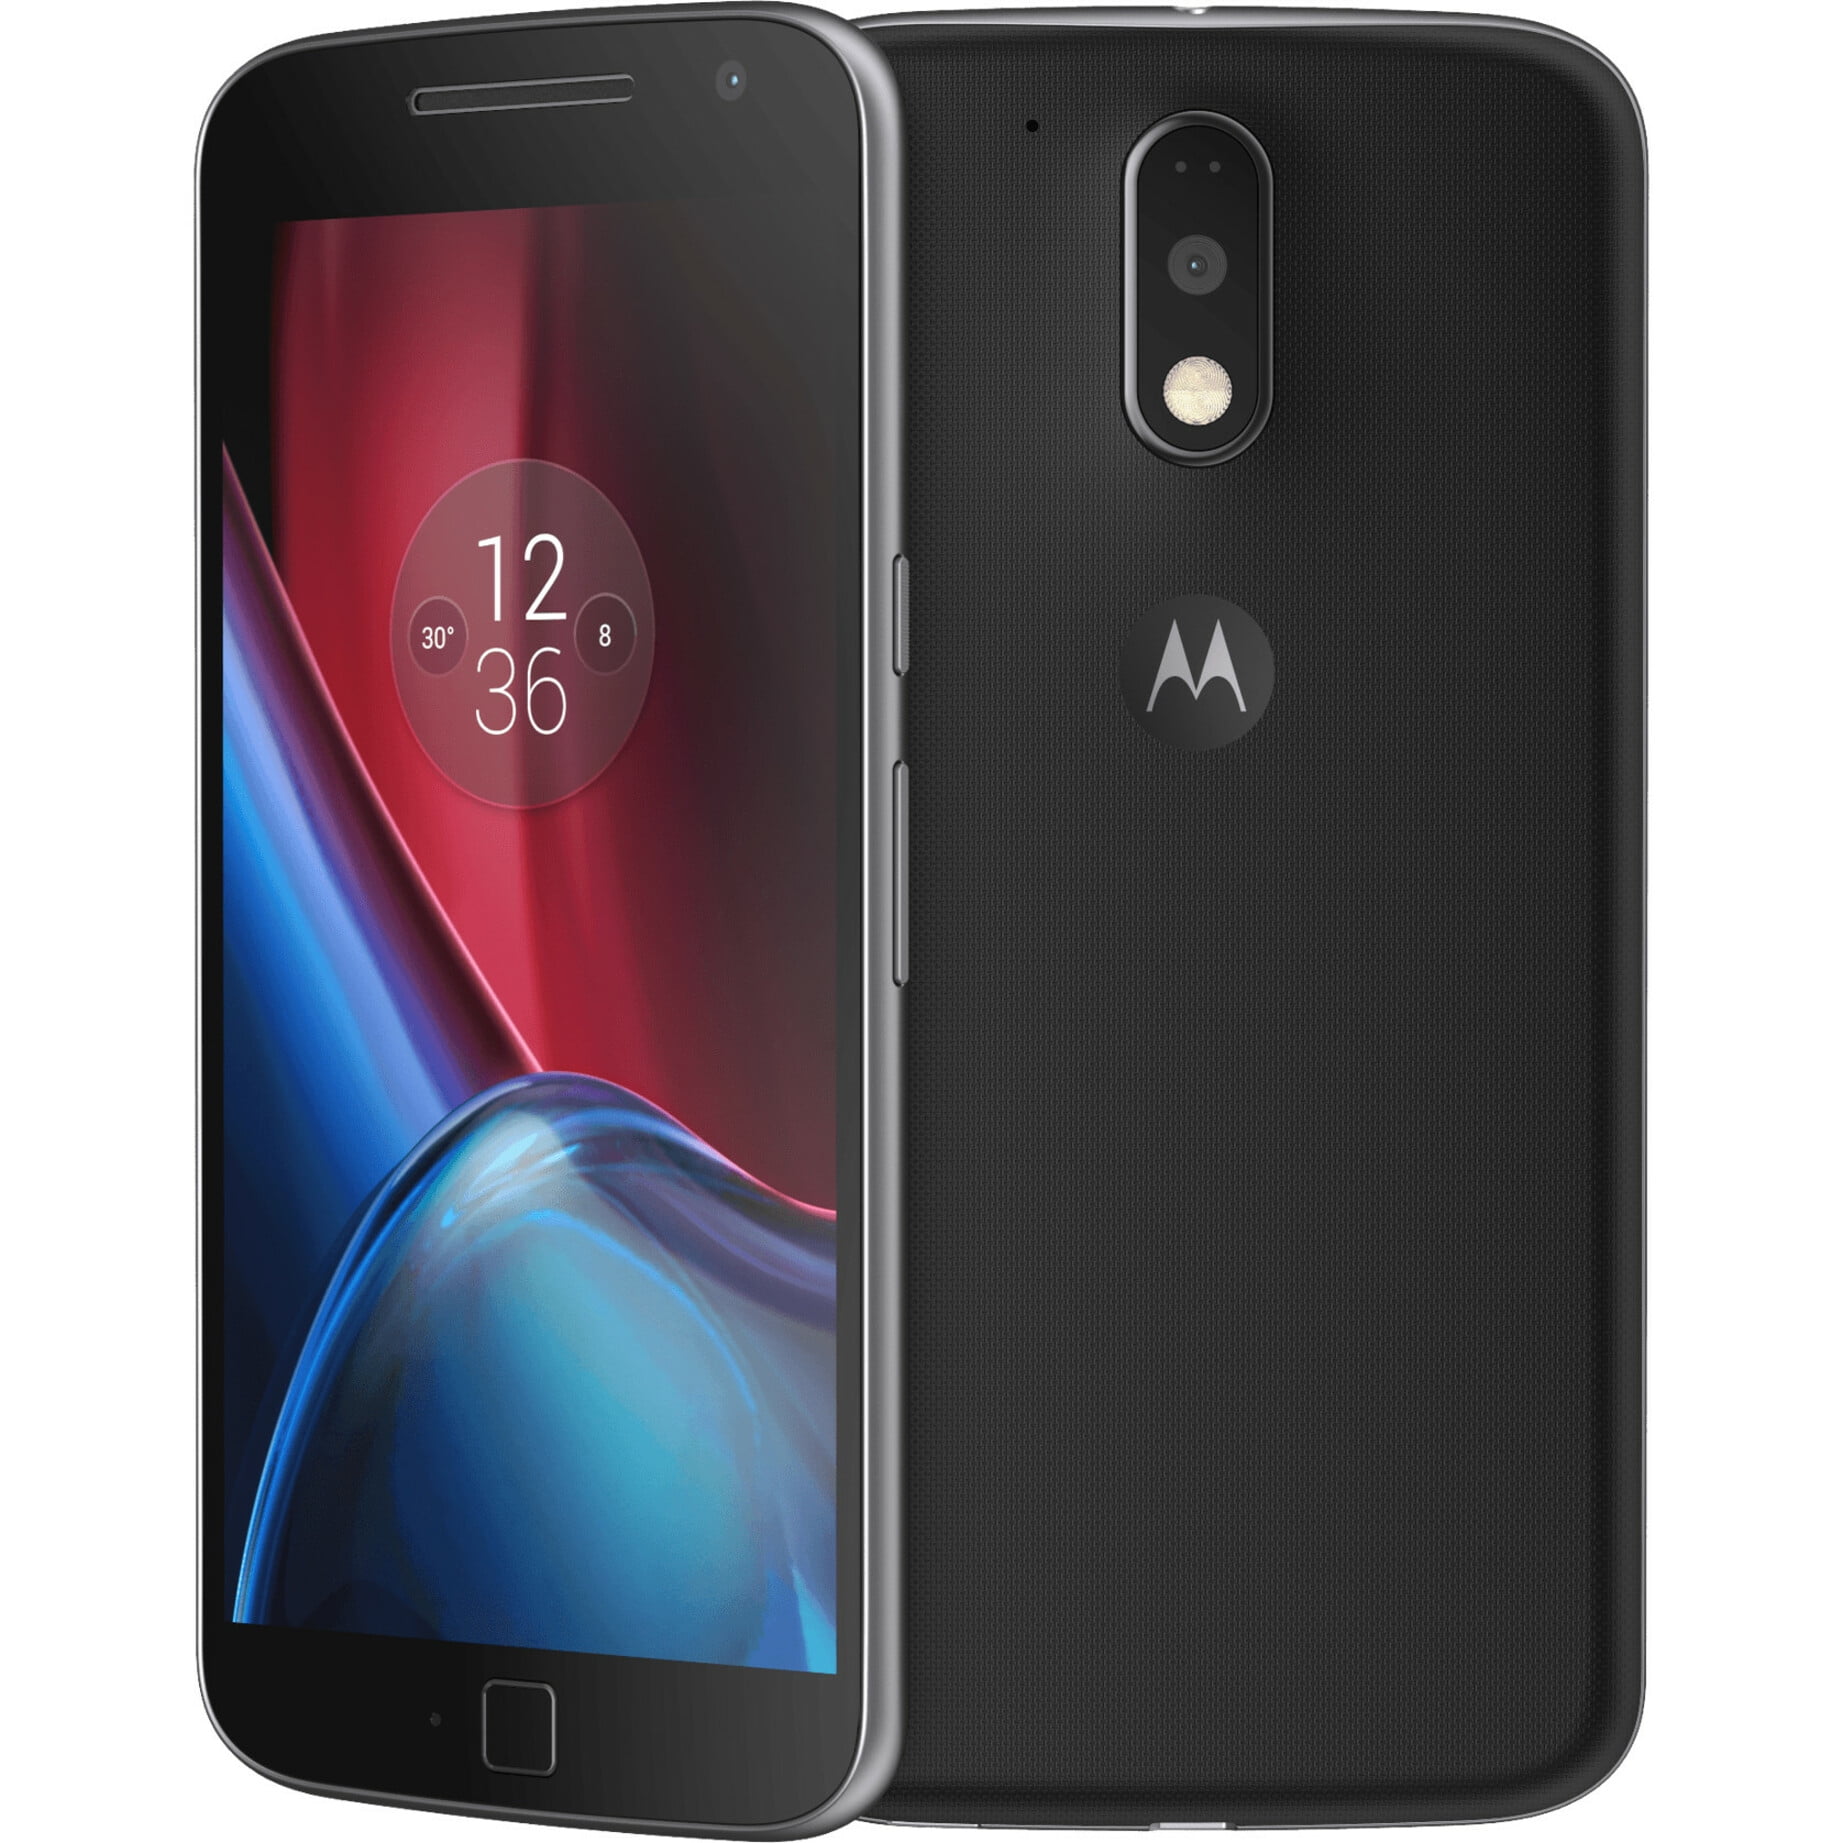  Motorola Moto G4 Plus XT1642 16GB Single-SIM (GSM Only, No  CDMA) Smartphone - International Version with No Warranty (Black) : Cell  Phones & Accessories